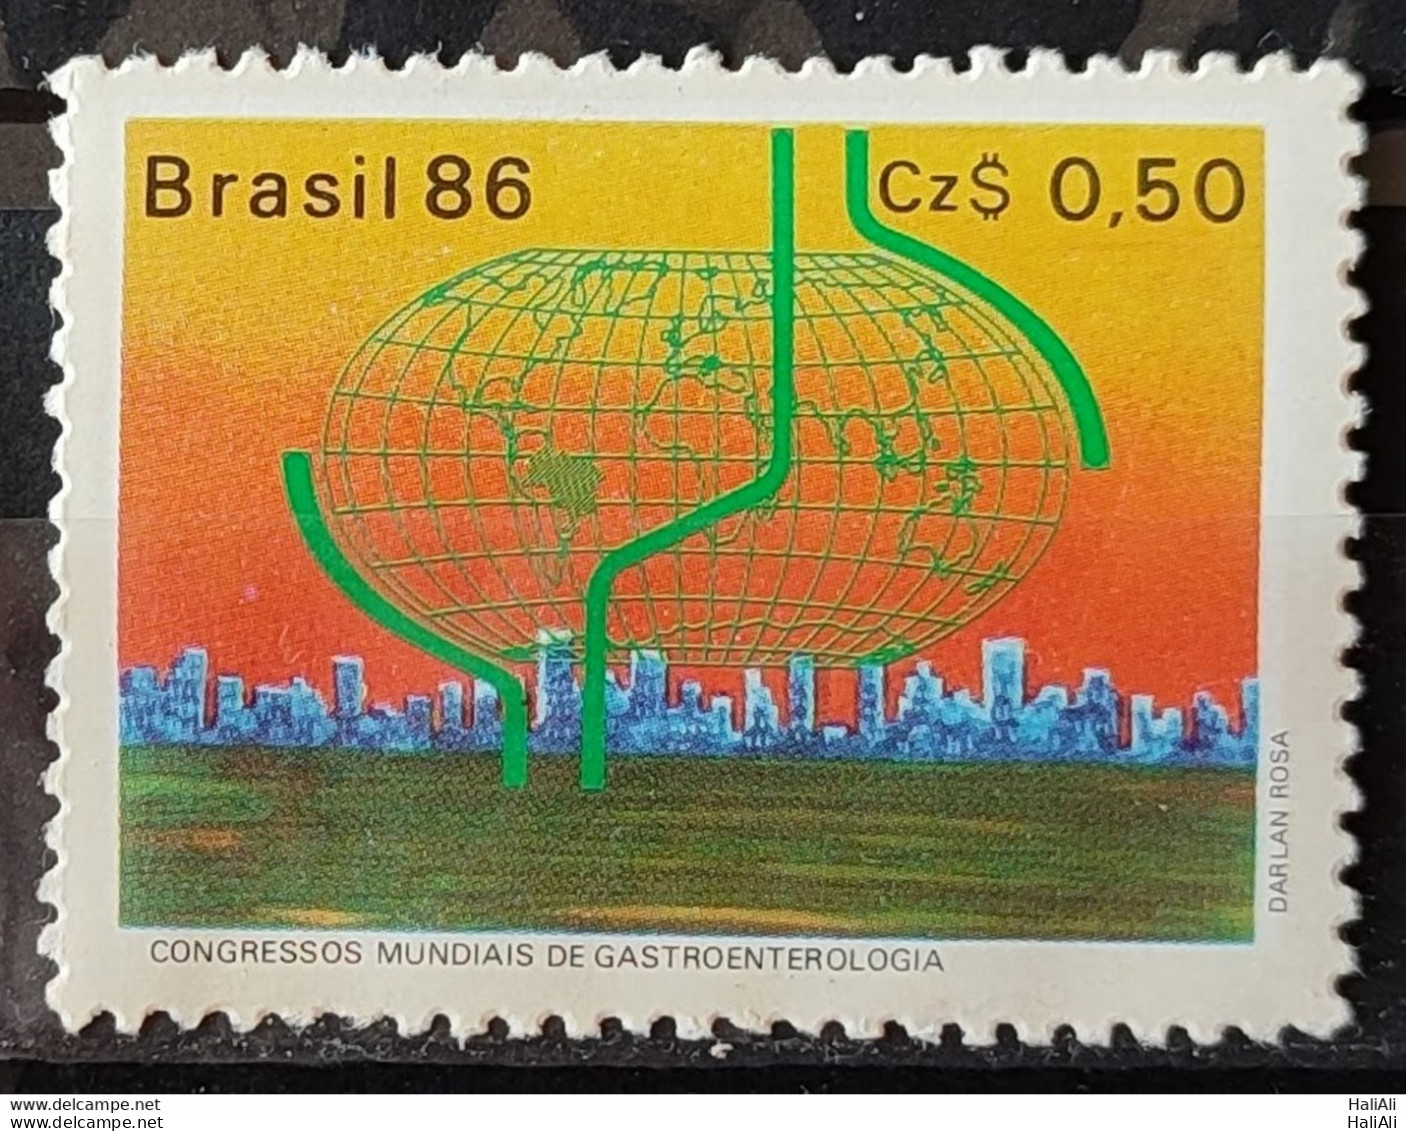 C 1520 Brazil Stamp Congress Of Gastroenterology Health 1986.jpg - Ongebruikt